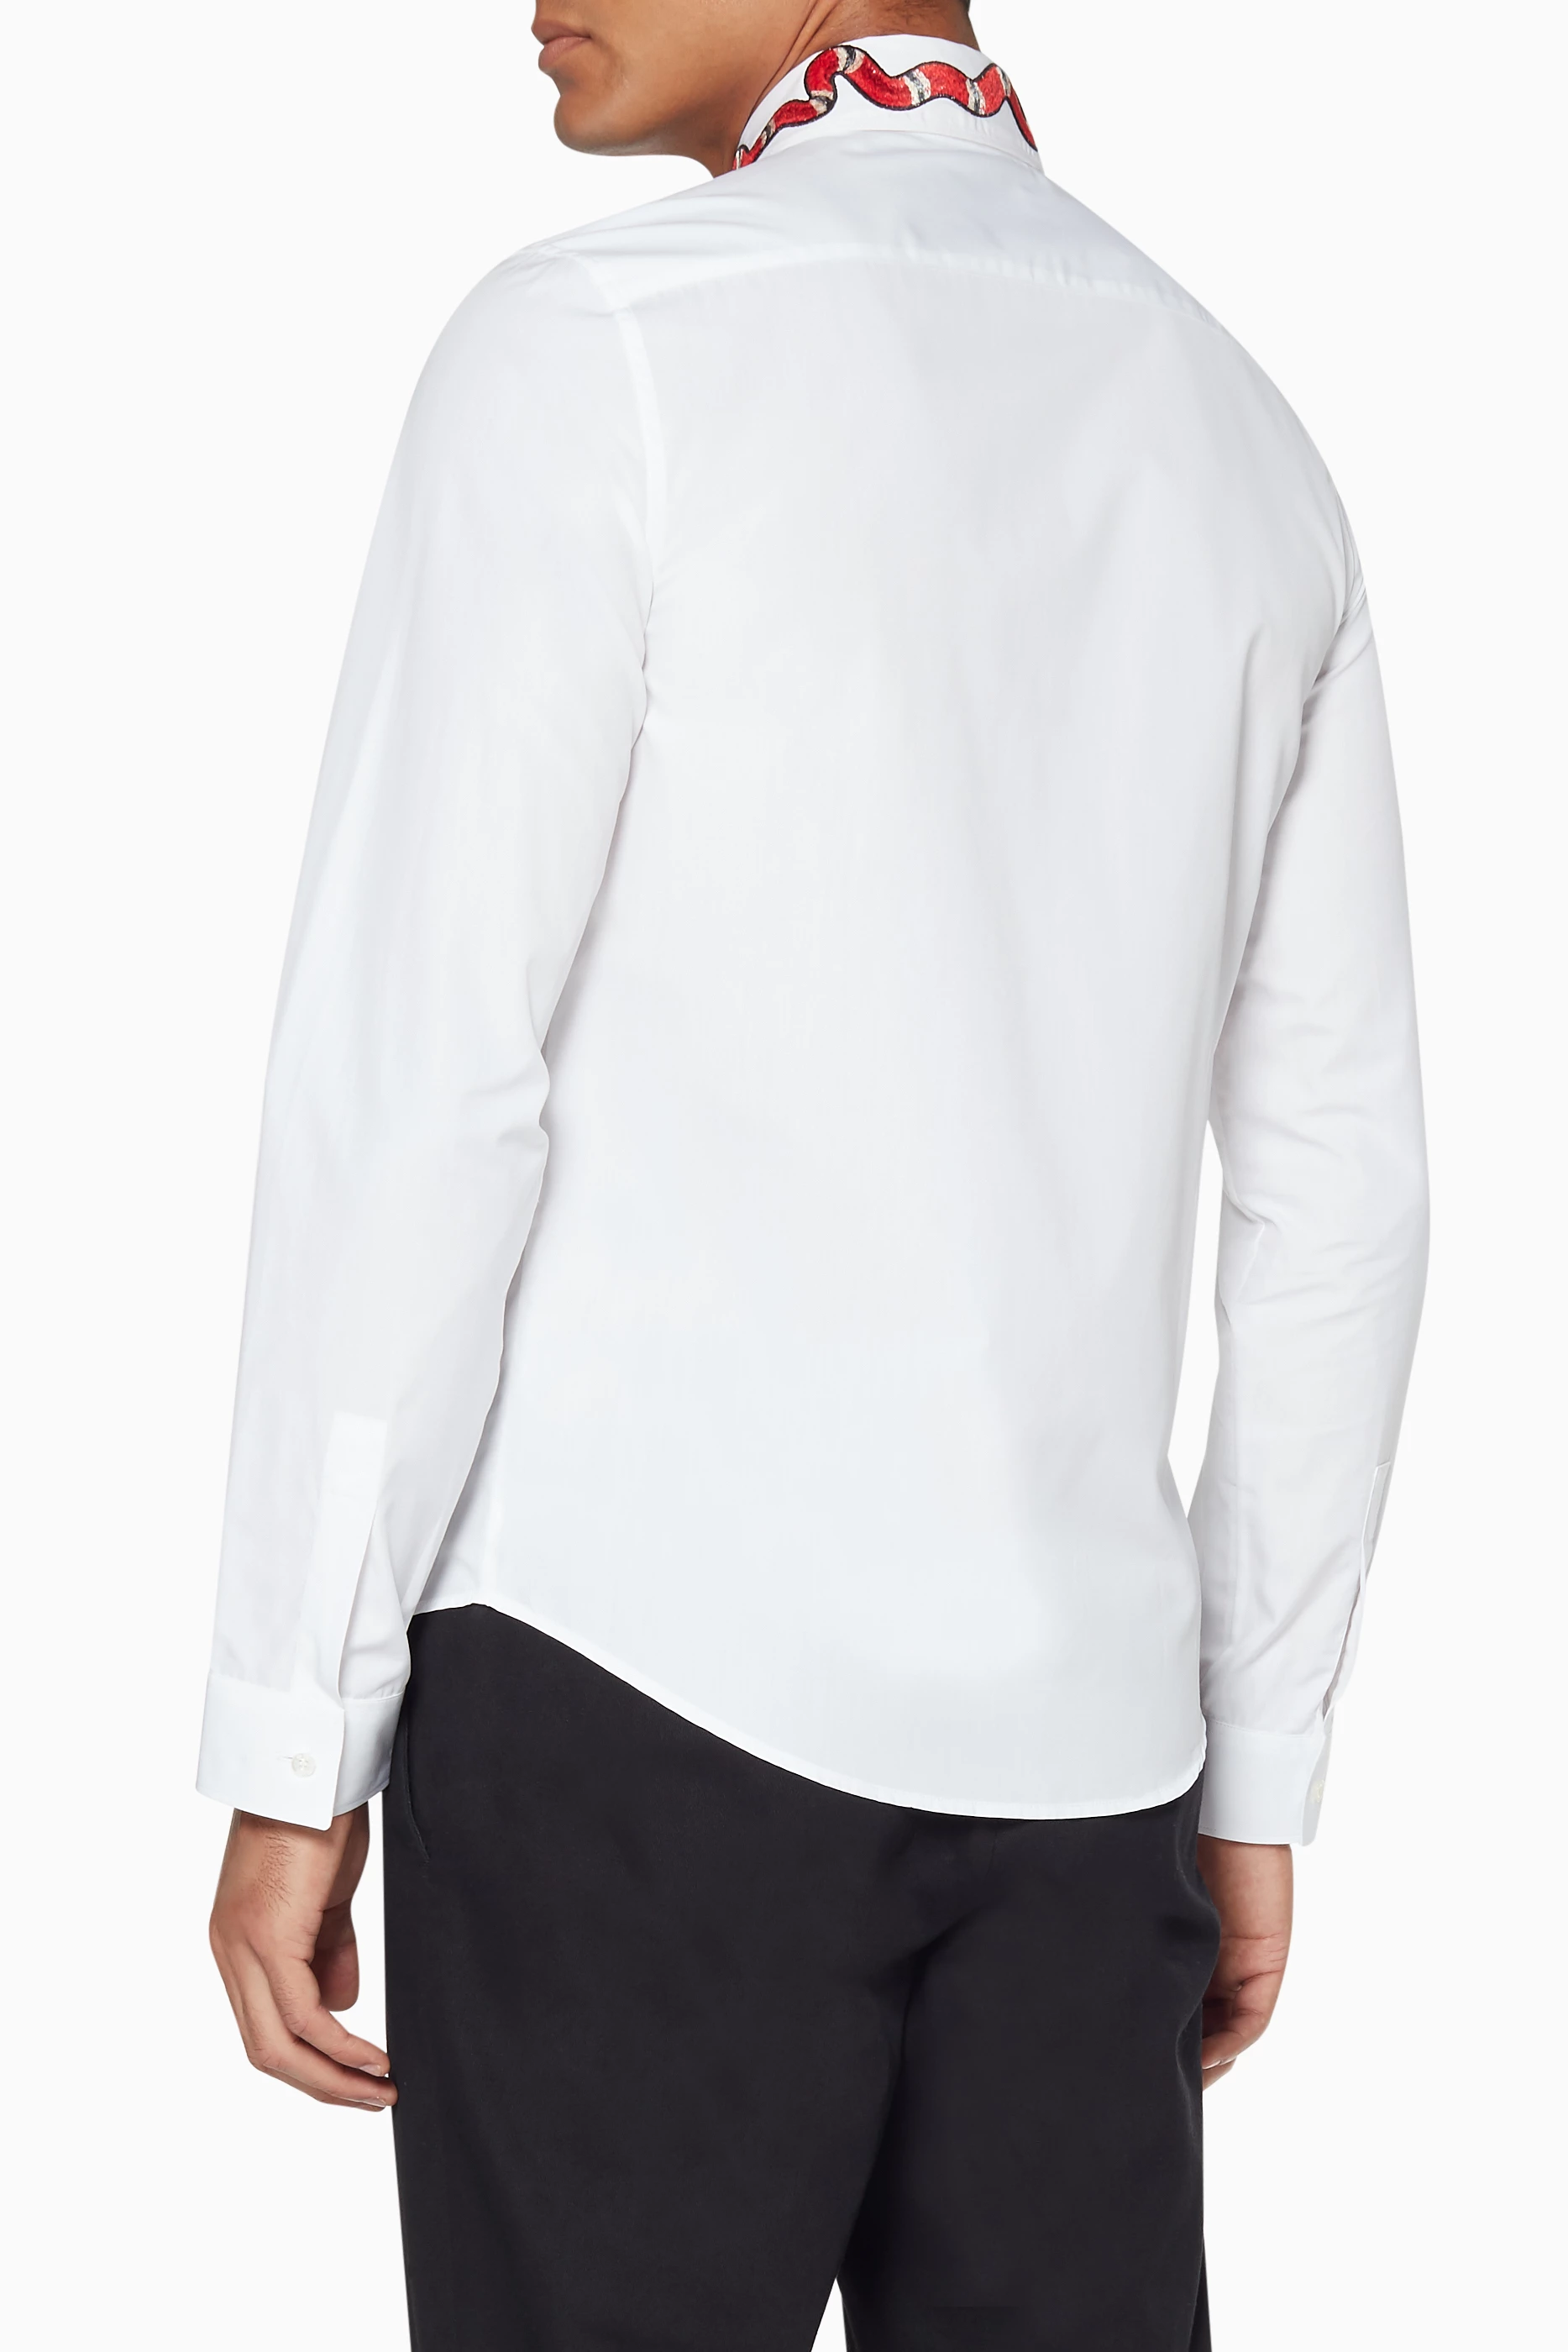 NWT Gucci Kingsnake Snake Iconic White Duke Button Down Dress Shirt Sz 37  14.5